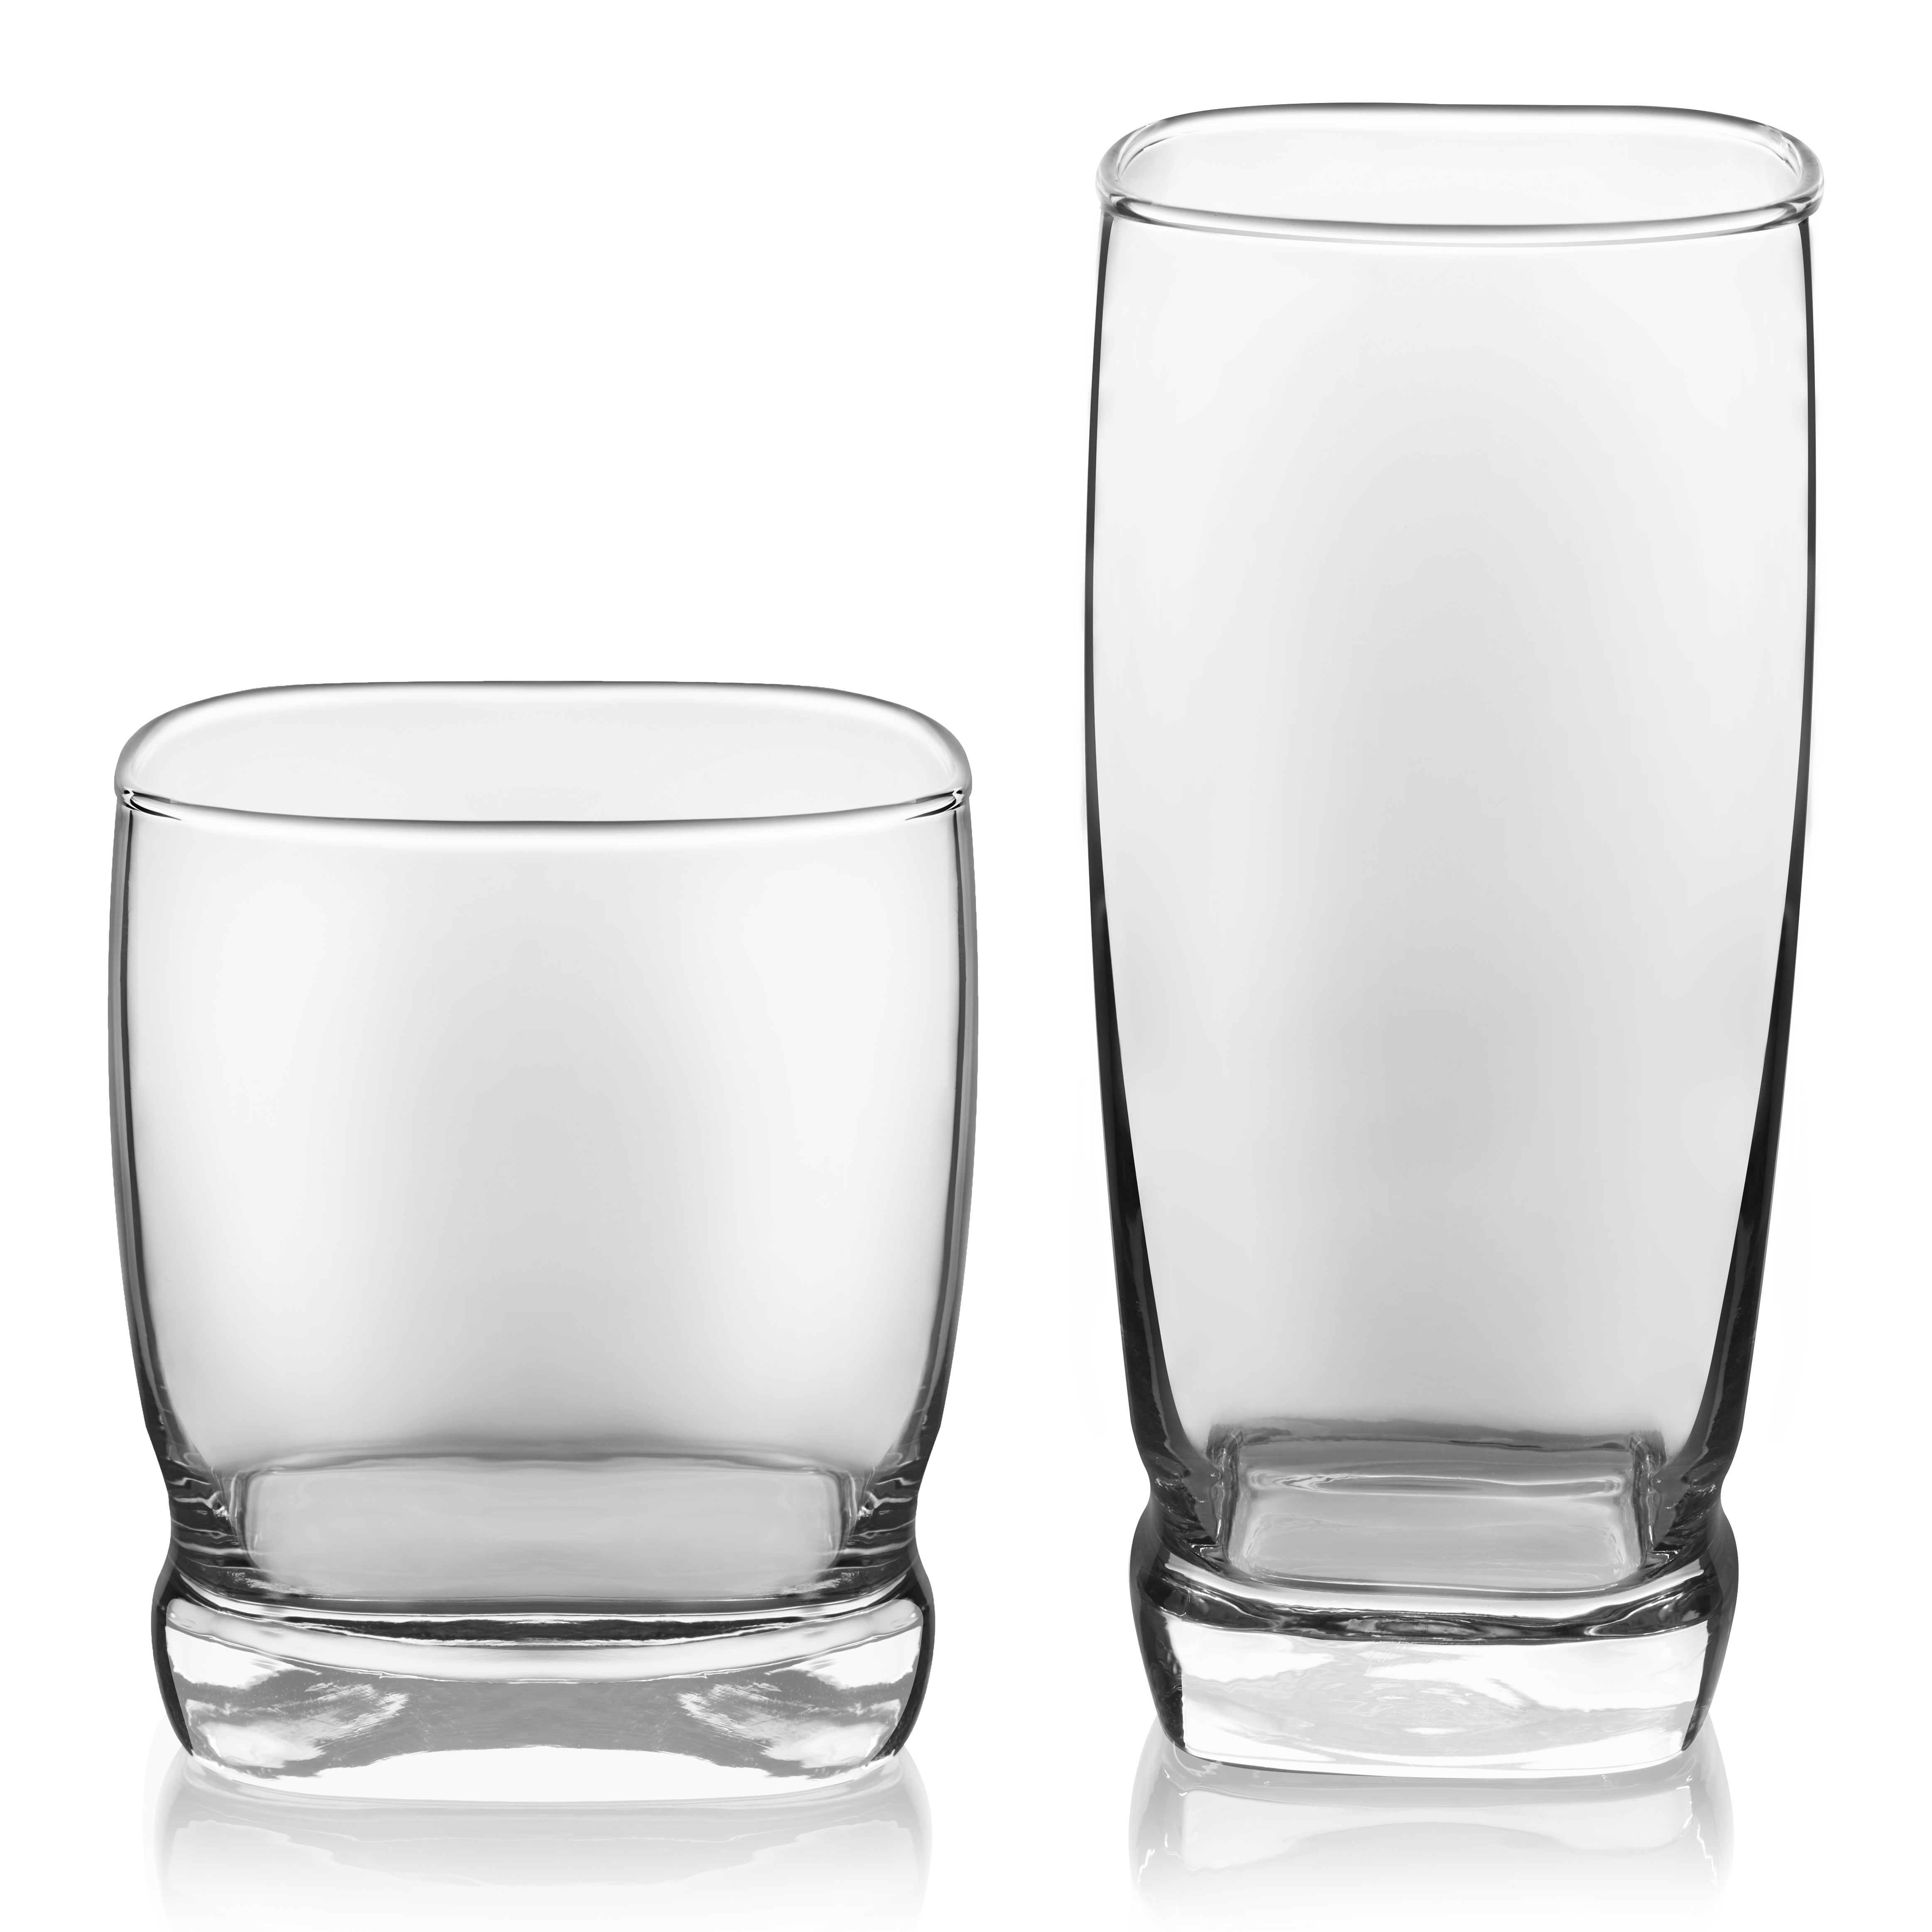 25 Ideal Libbey Glass tower Vase 2023 free download libbey glass tower vase of libbey carrington 16 piece glass set walmart com inside 74076c95 c521 40c0 8b57 46301eee1a0d 1 4463c11656b18a60e05b3cbbbd666256